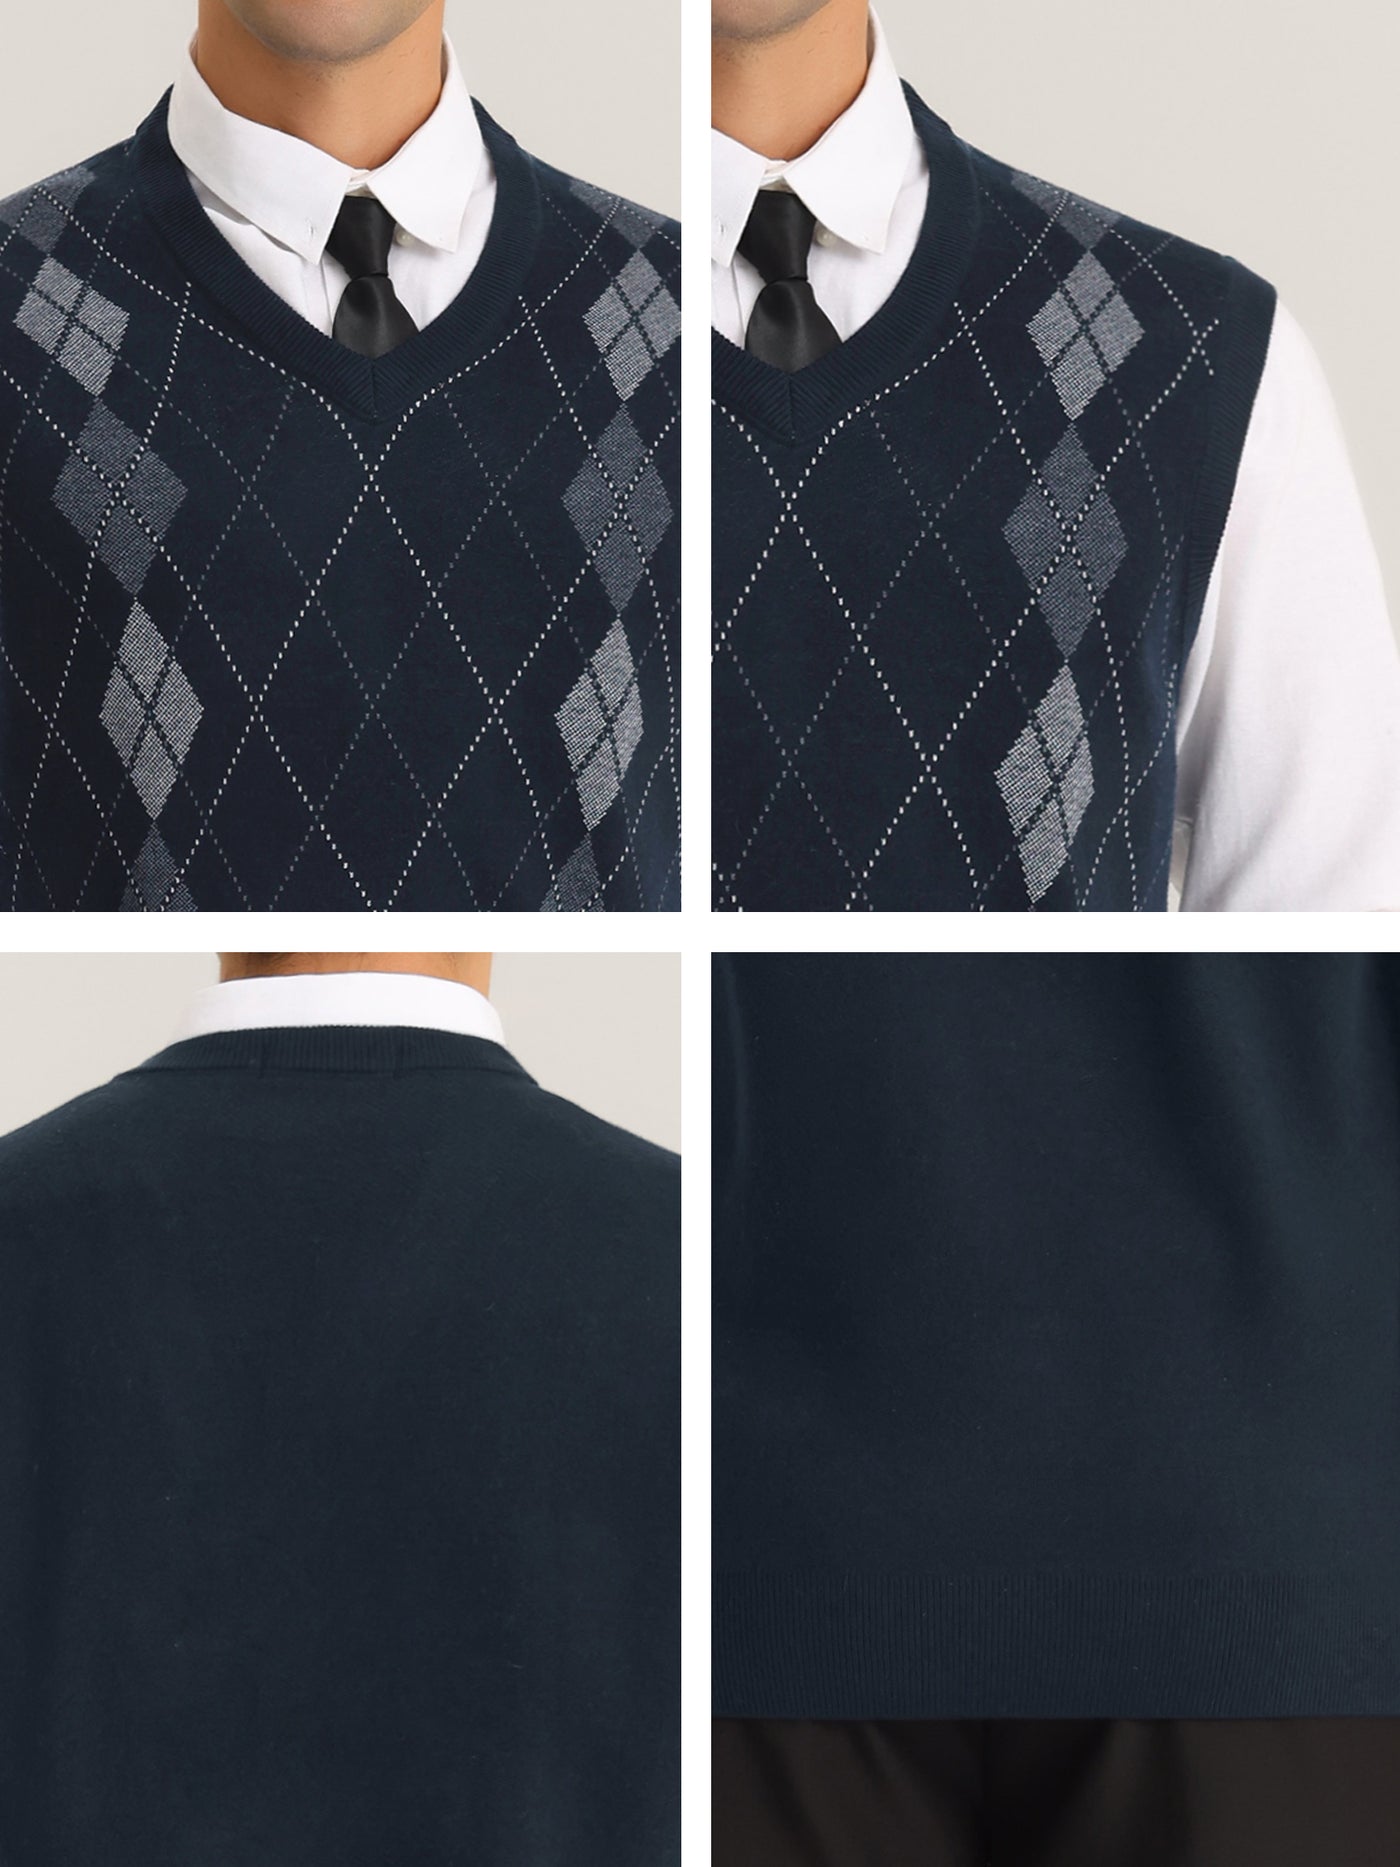 Bublédon Men's Argyle Vests Sleeveless V Neck Slim Fit Pullover Knitted Sweater